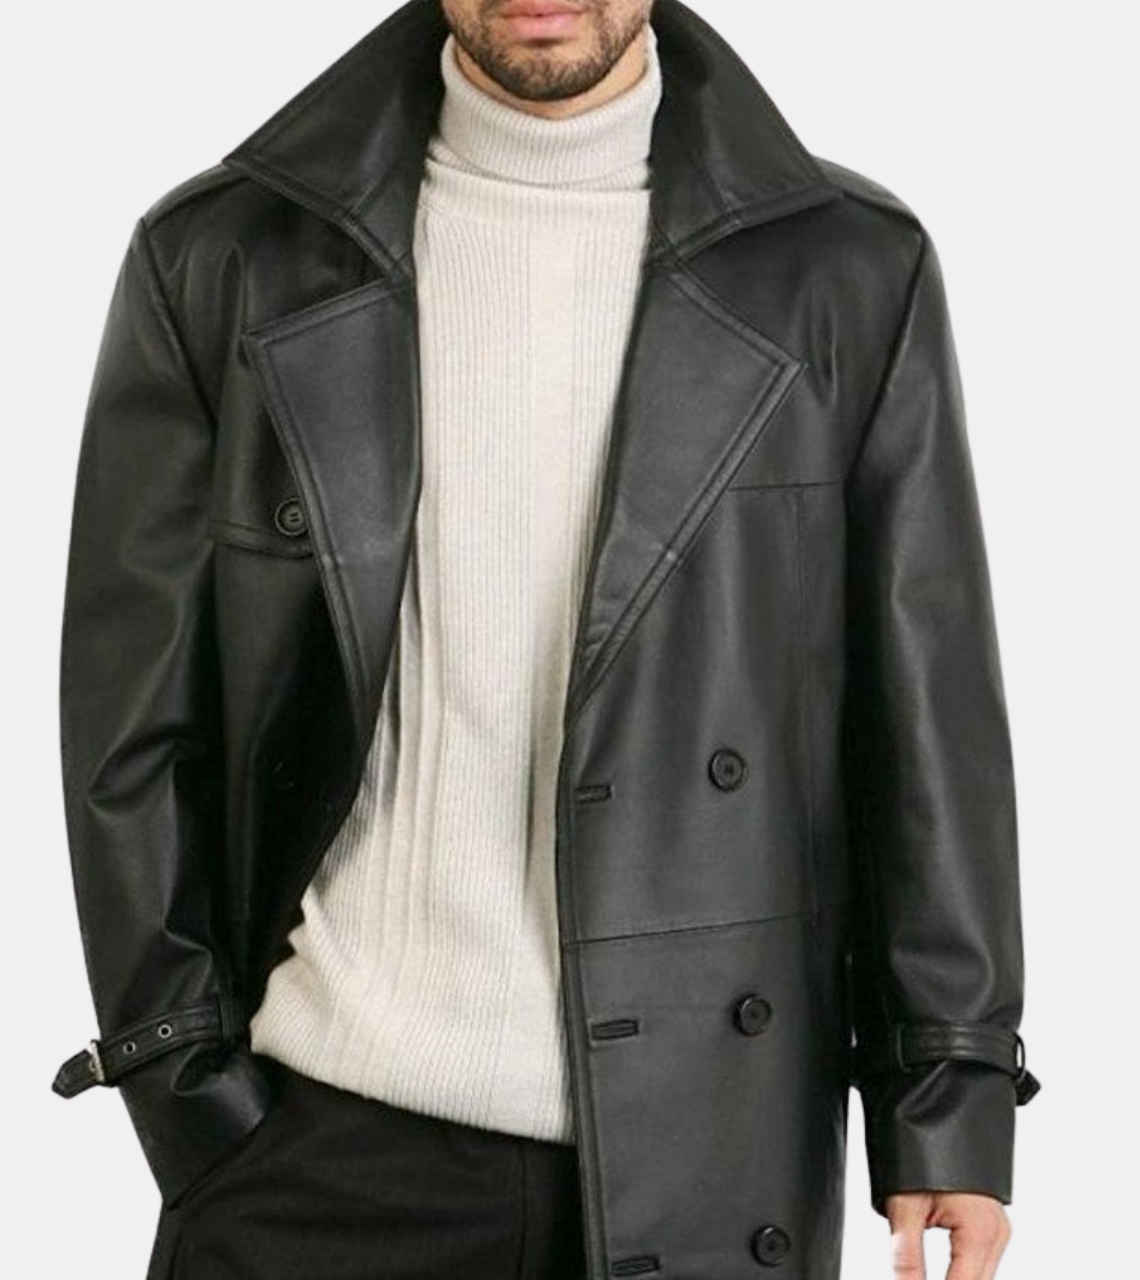 Esterz Men's Black Leather Trench Coat